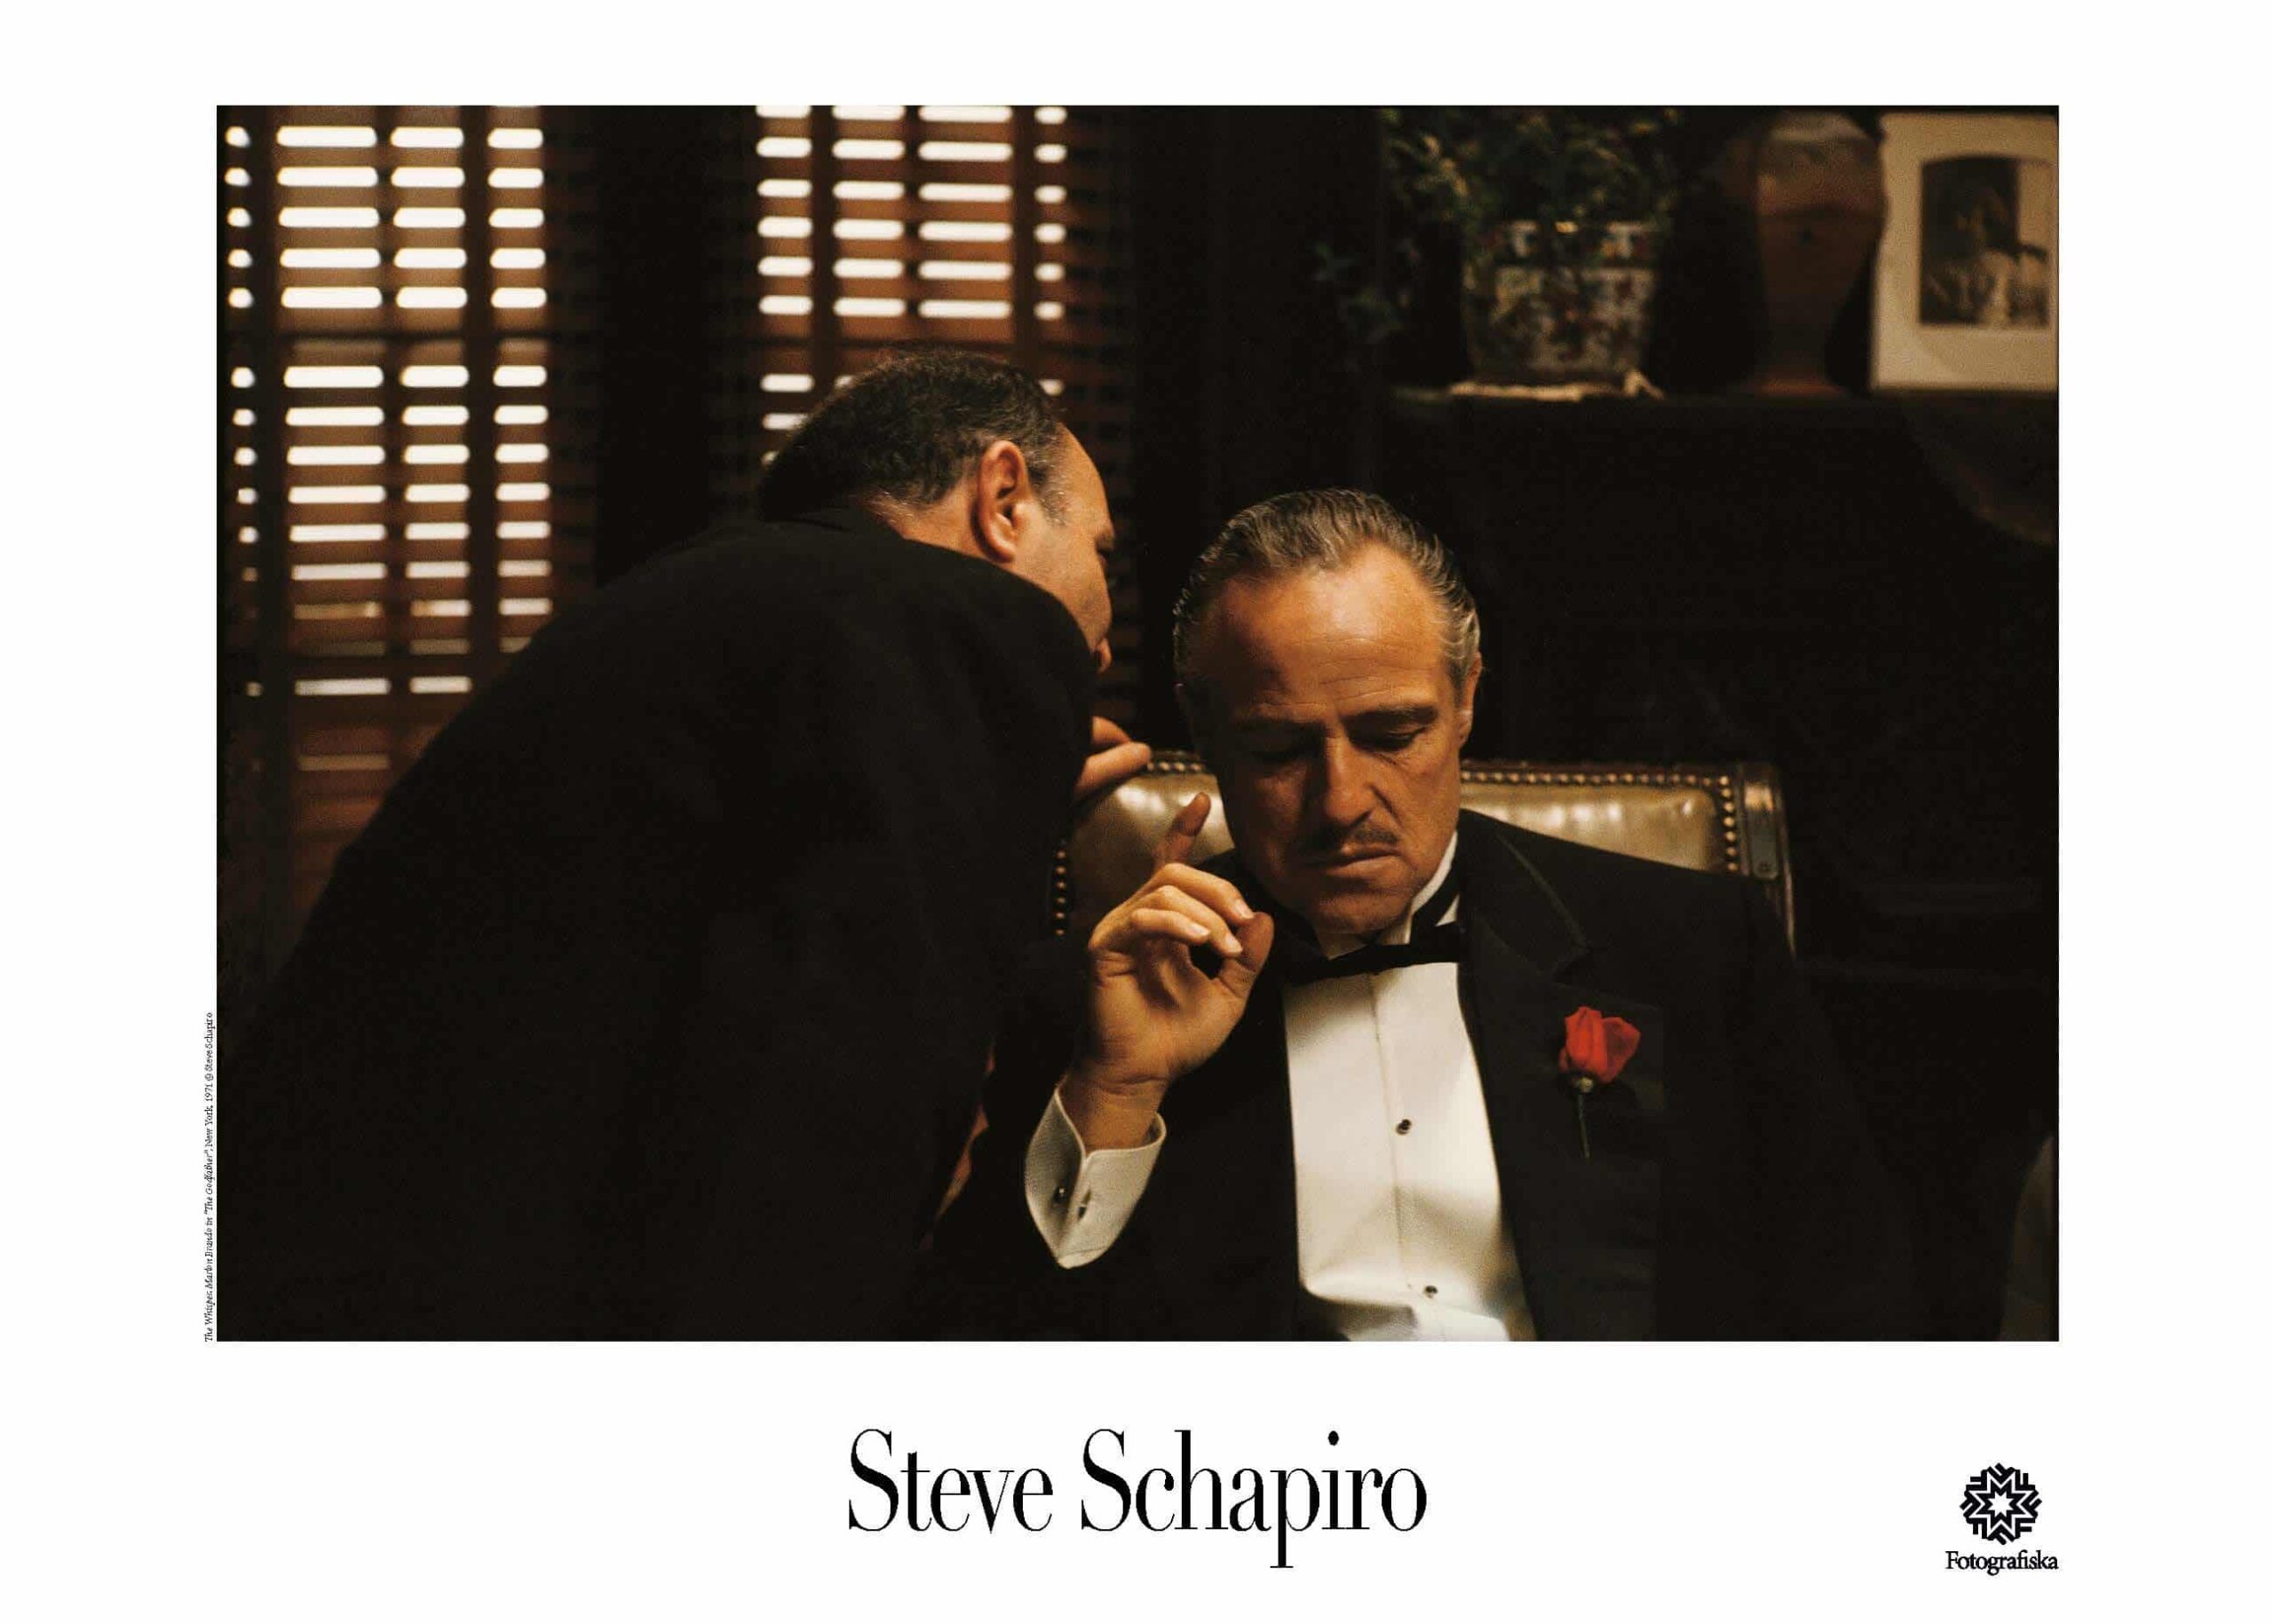 Steve Schapiro, The Whisper. Marlon Brando in 